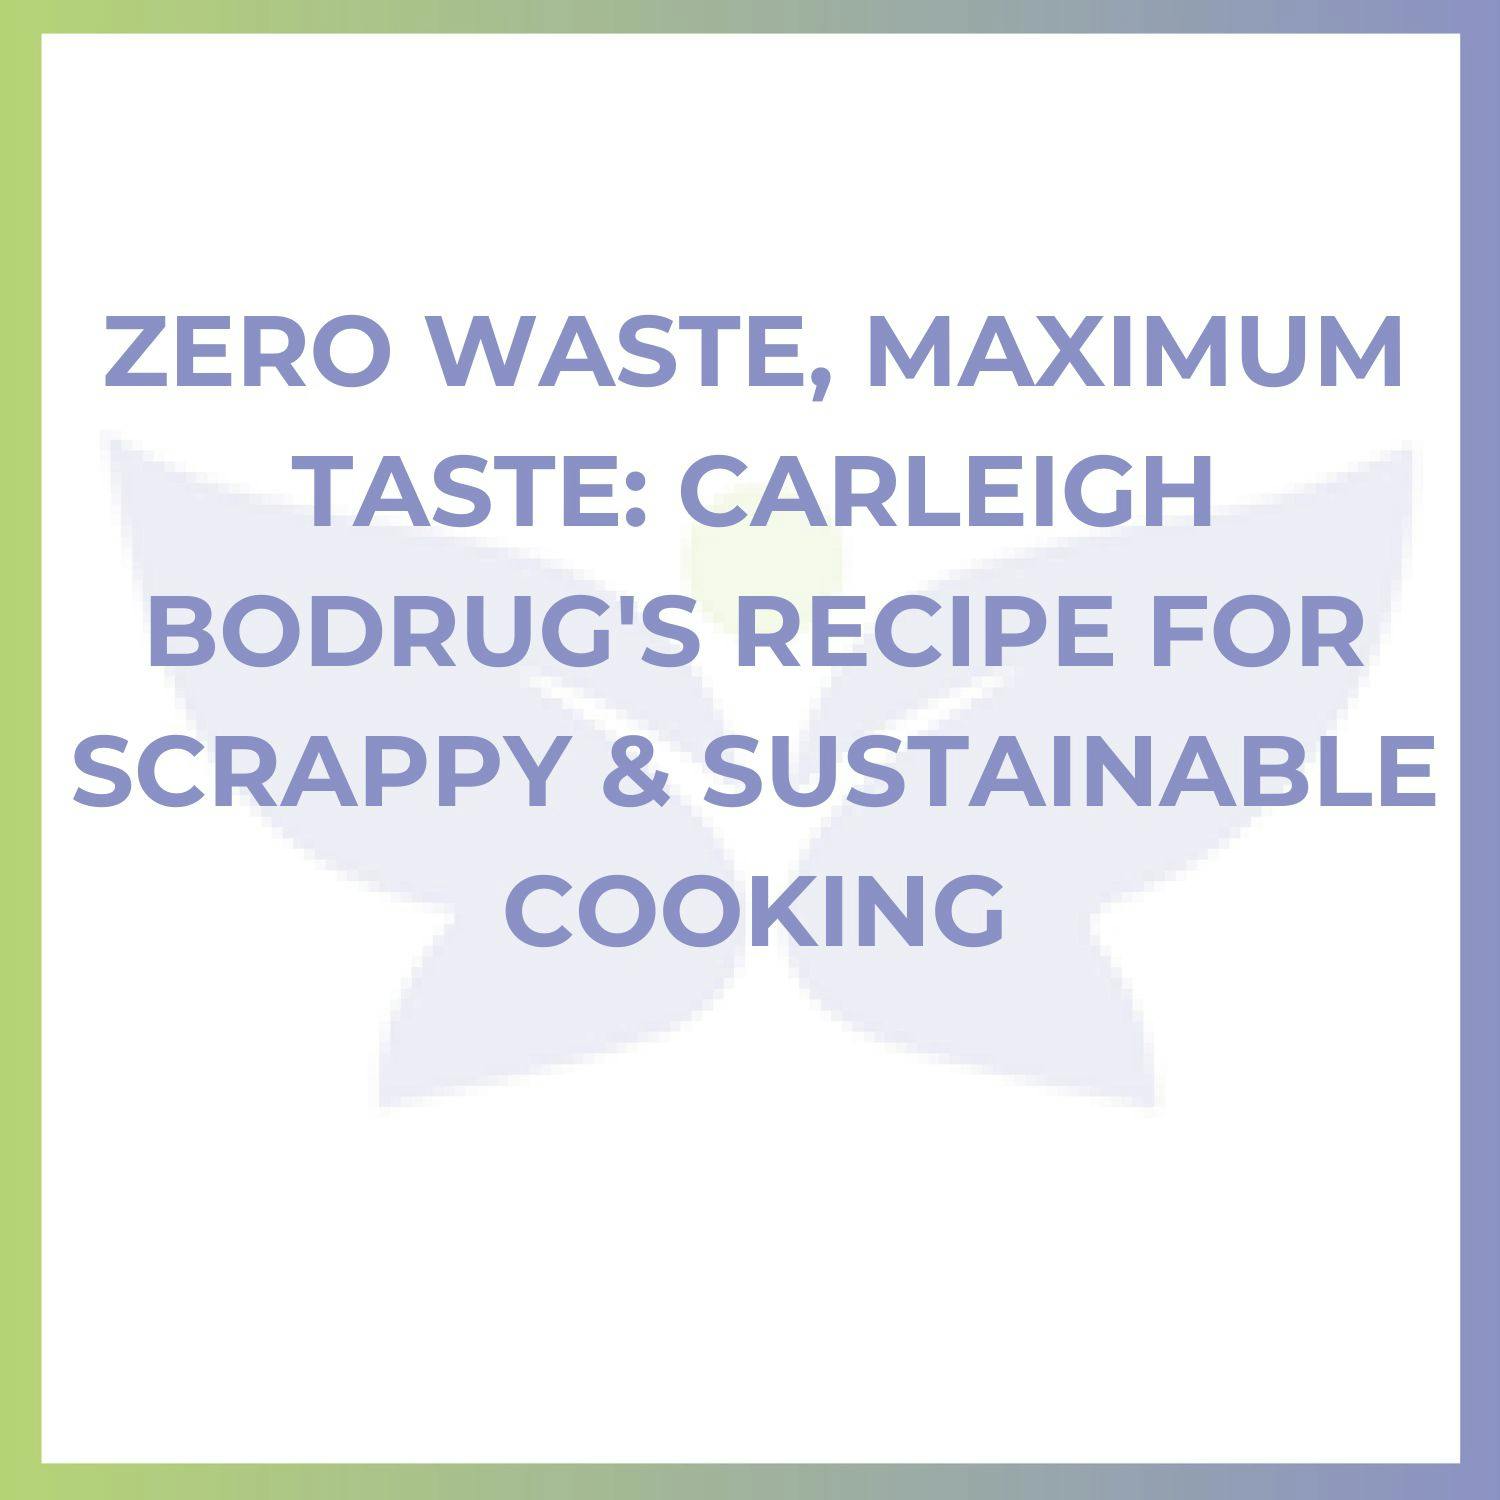 Zero Waste, Maximum Taste: Carleigh Bodrug’s Recipe for Scrappy & Sustainable Cooking